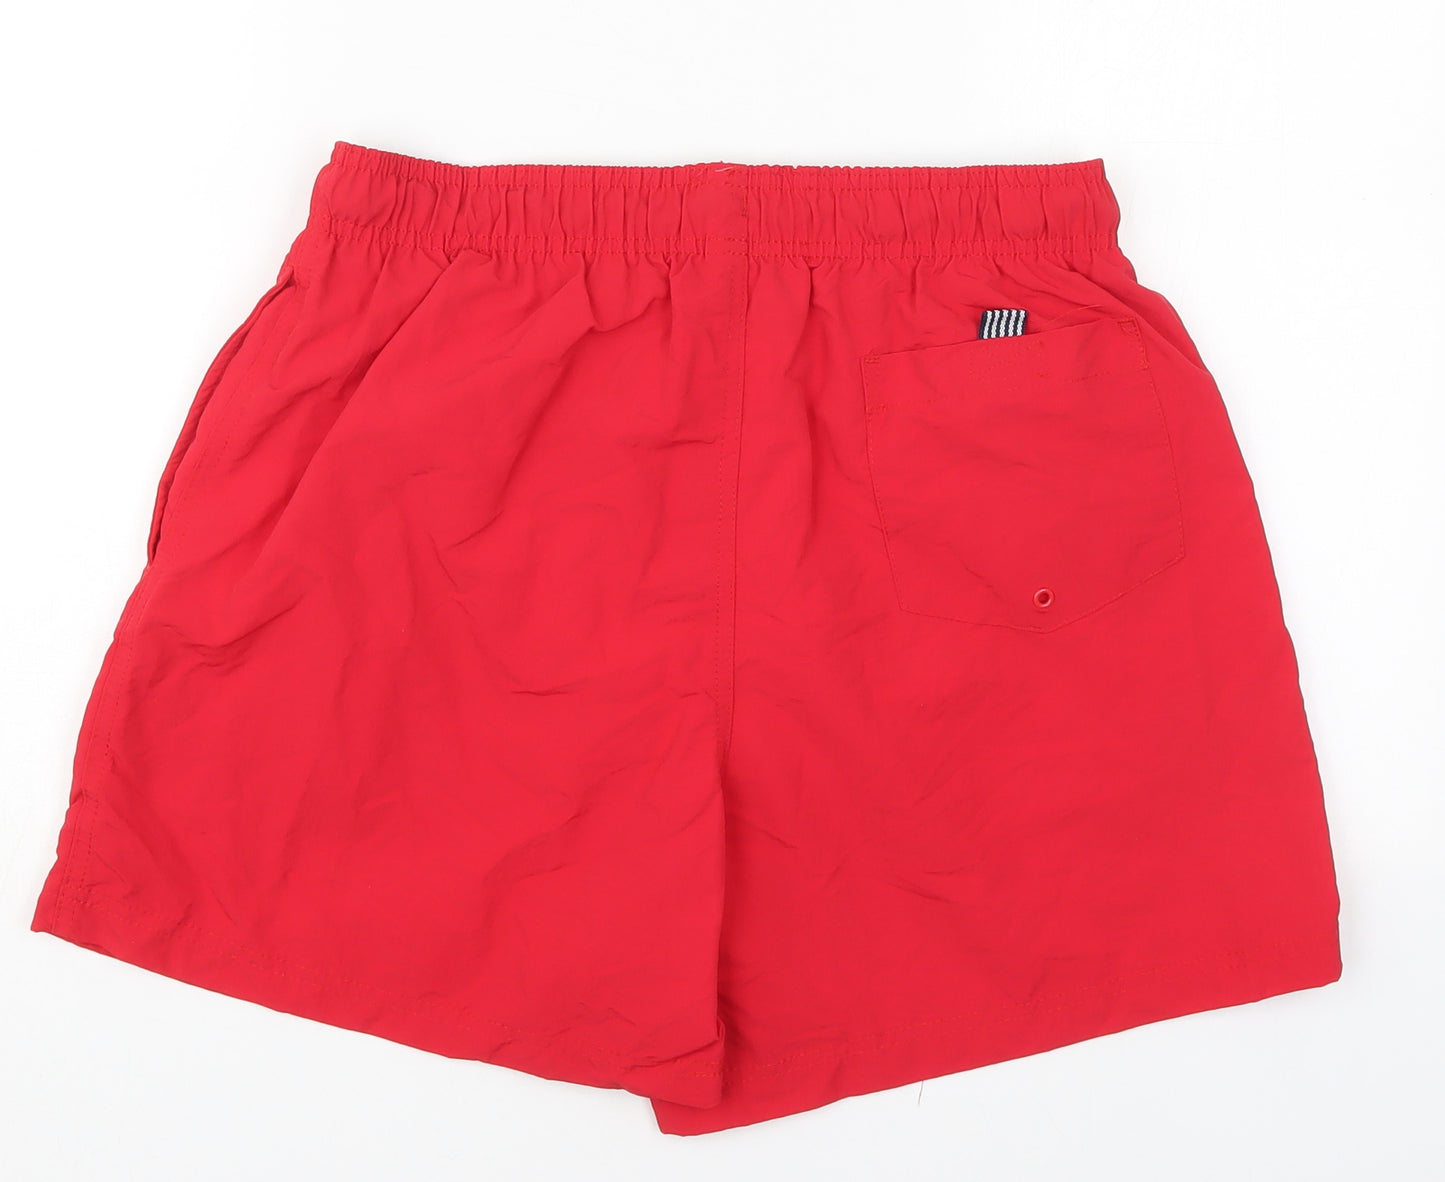 F&F Mens Red  Nylon Athletic Shorts Size M  Regular Drawstring - Swim Shorts